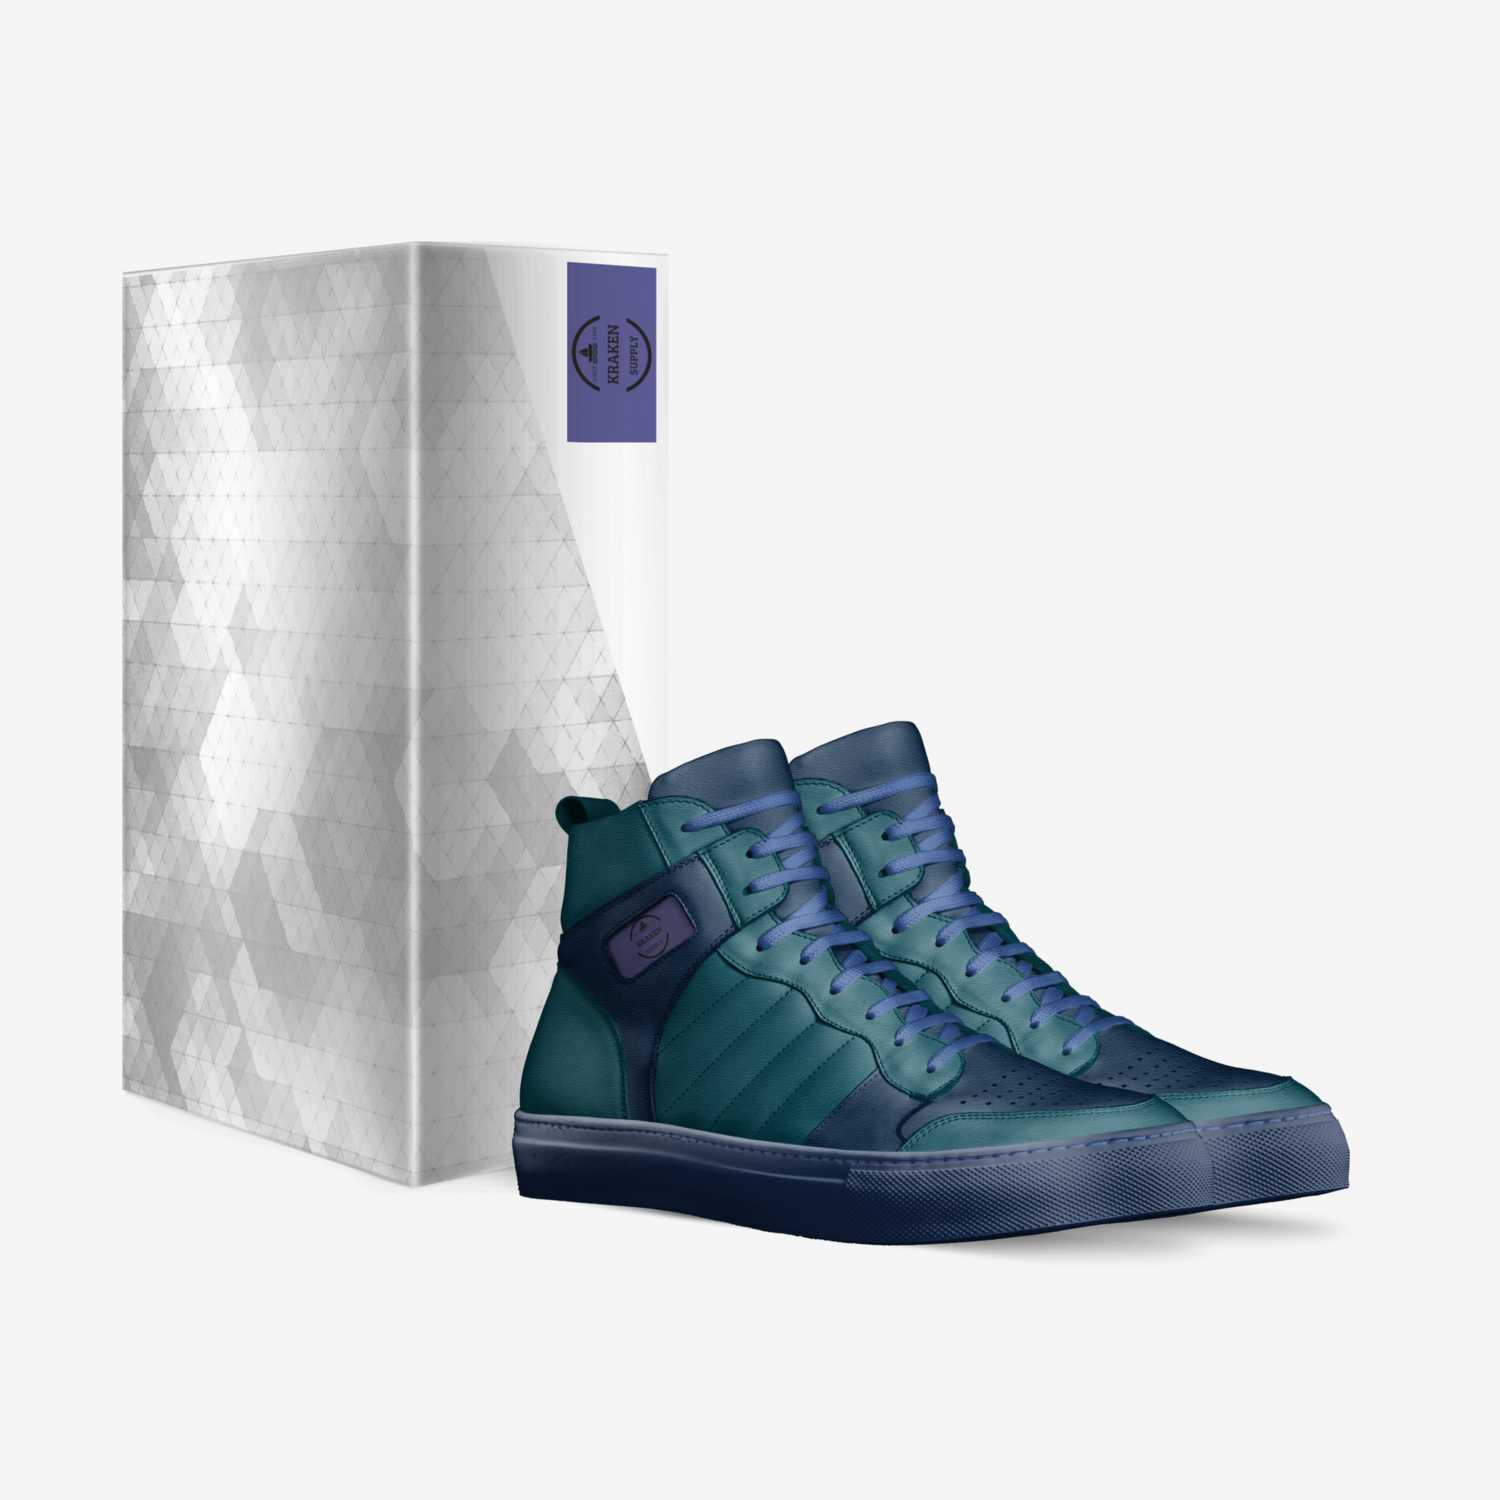 Kraken custom made in Italy shoes by Jax Boyd | Box view